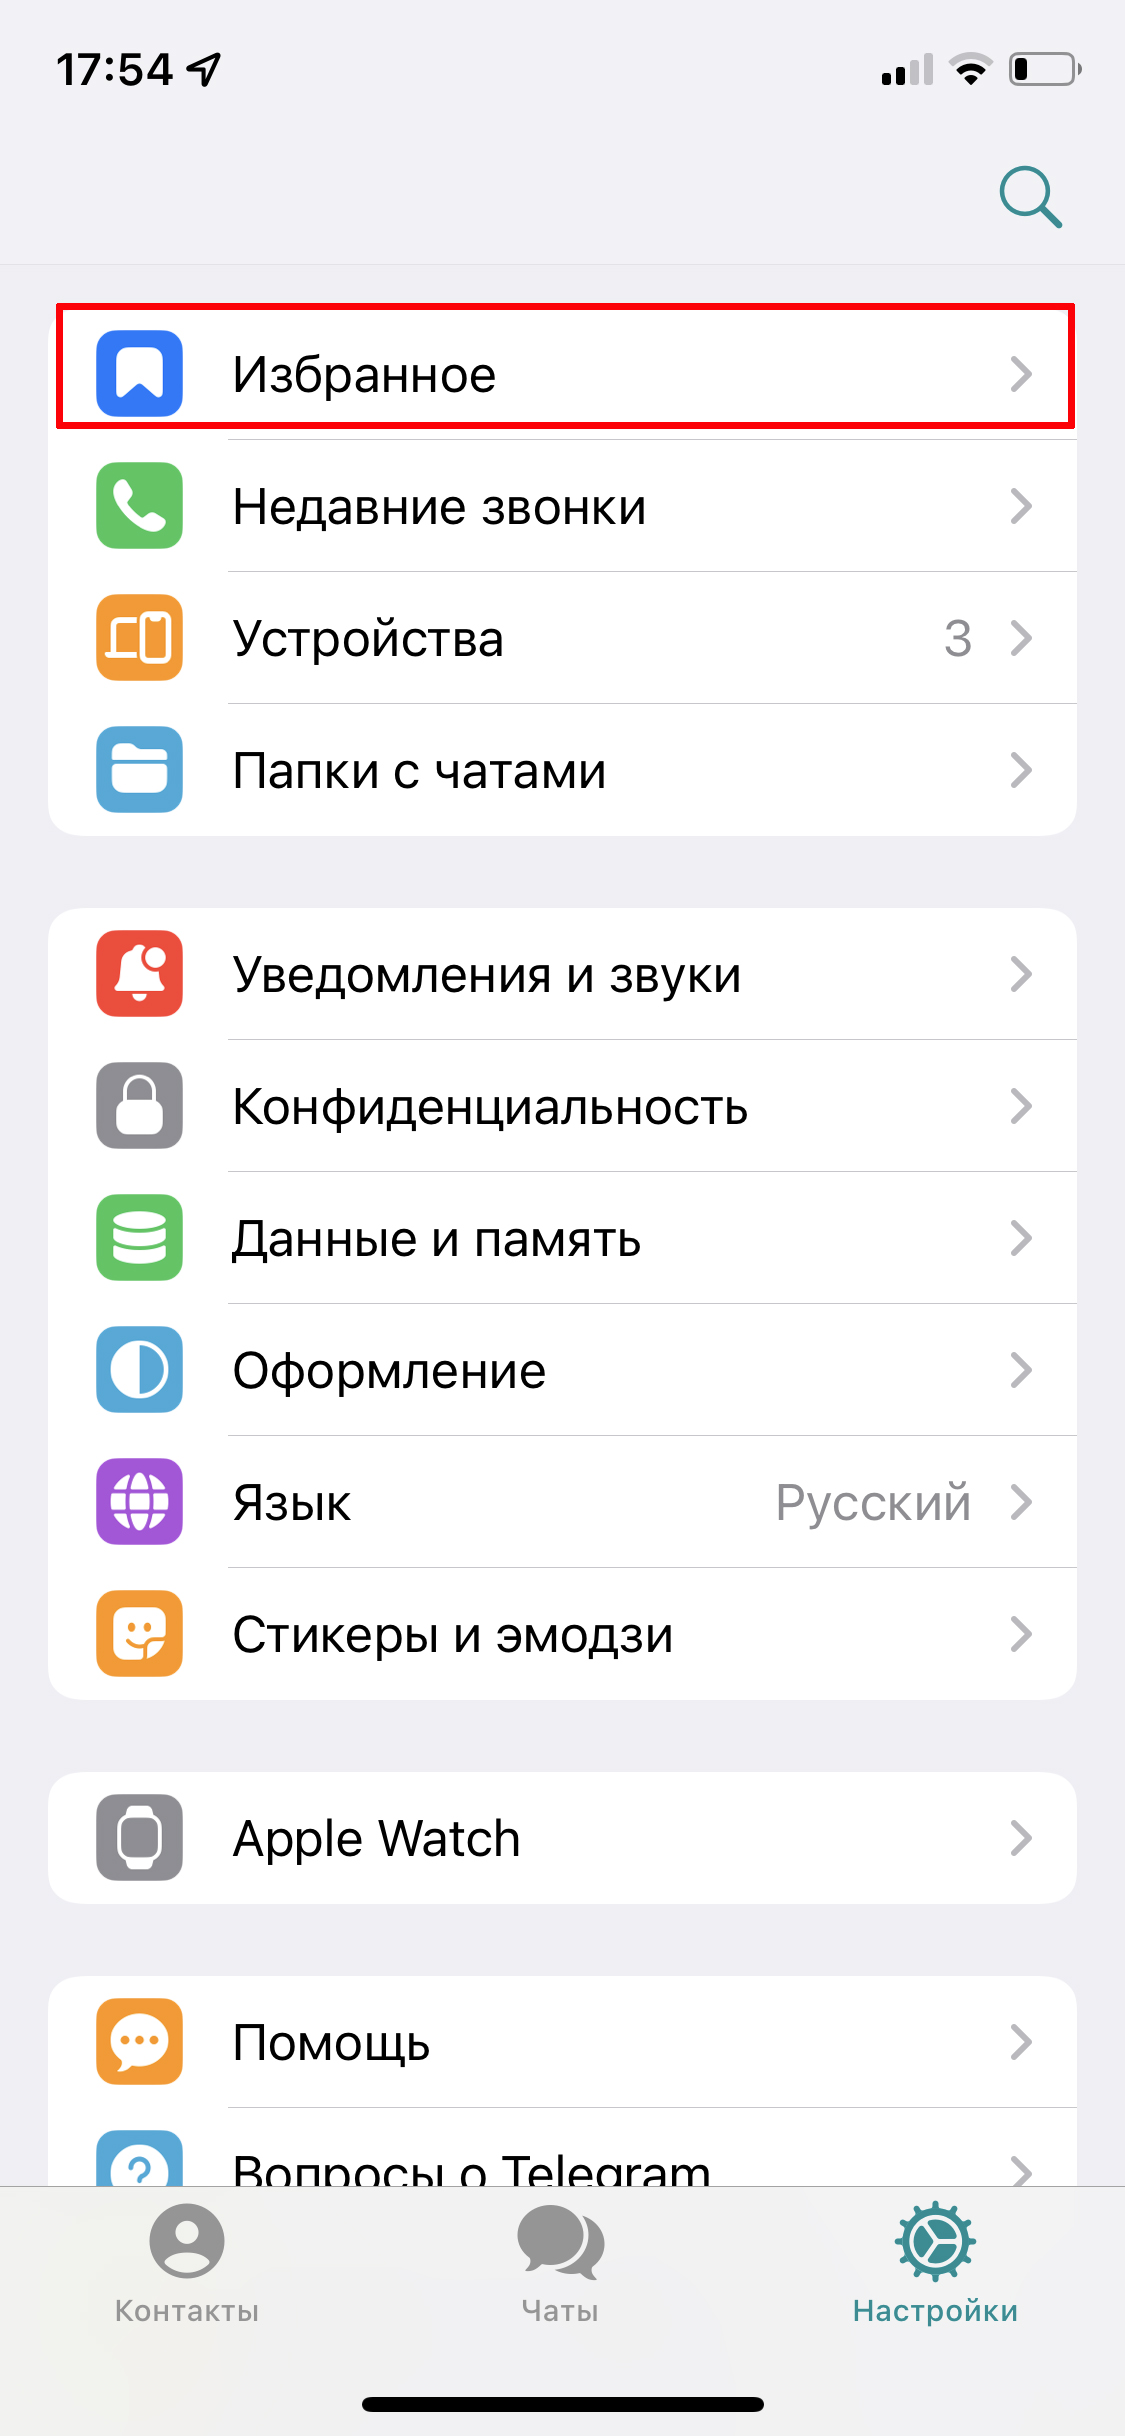 Телеграмм как перевести на русский язык андроиде фото 63